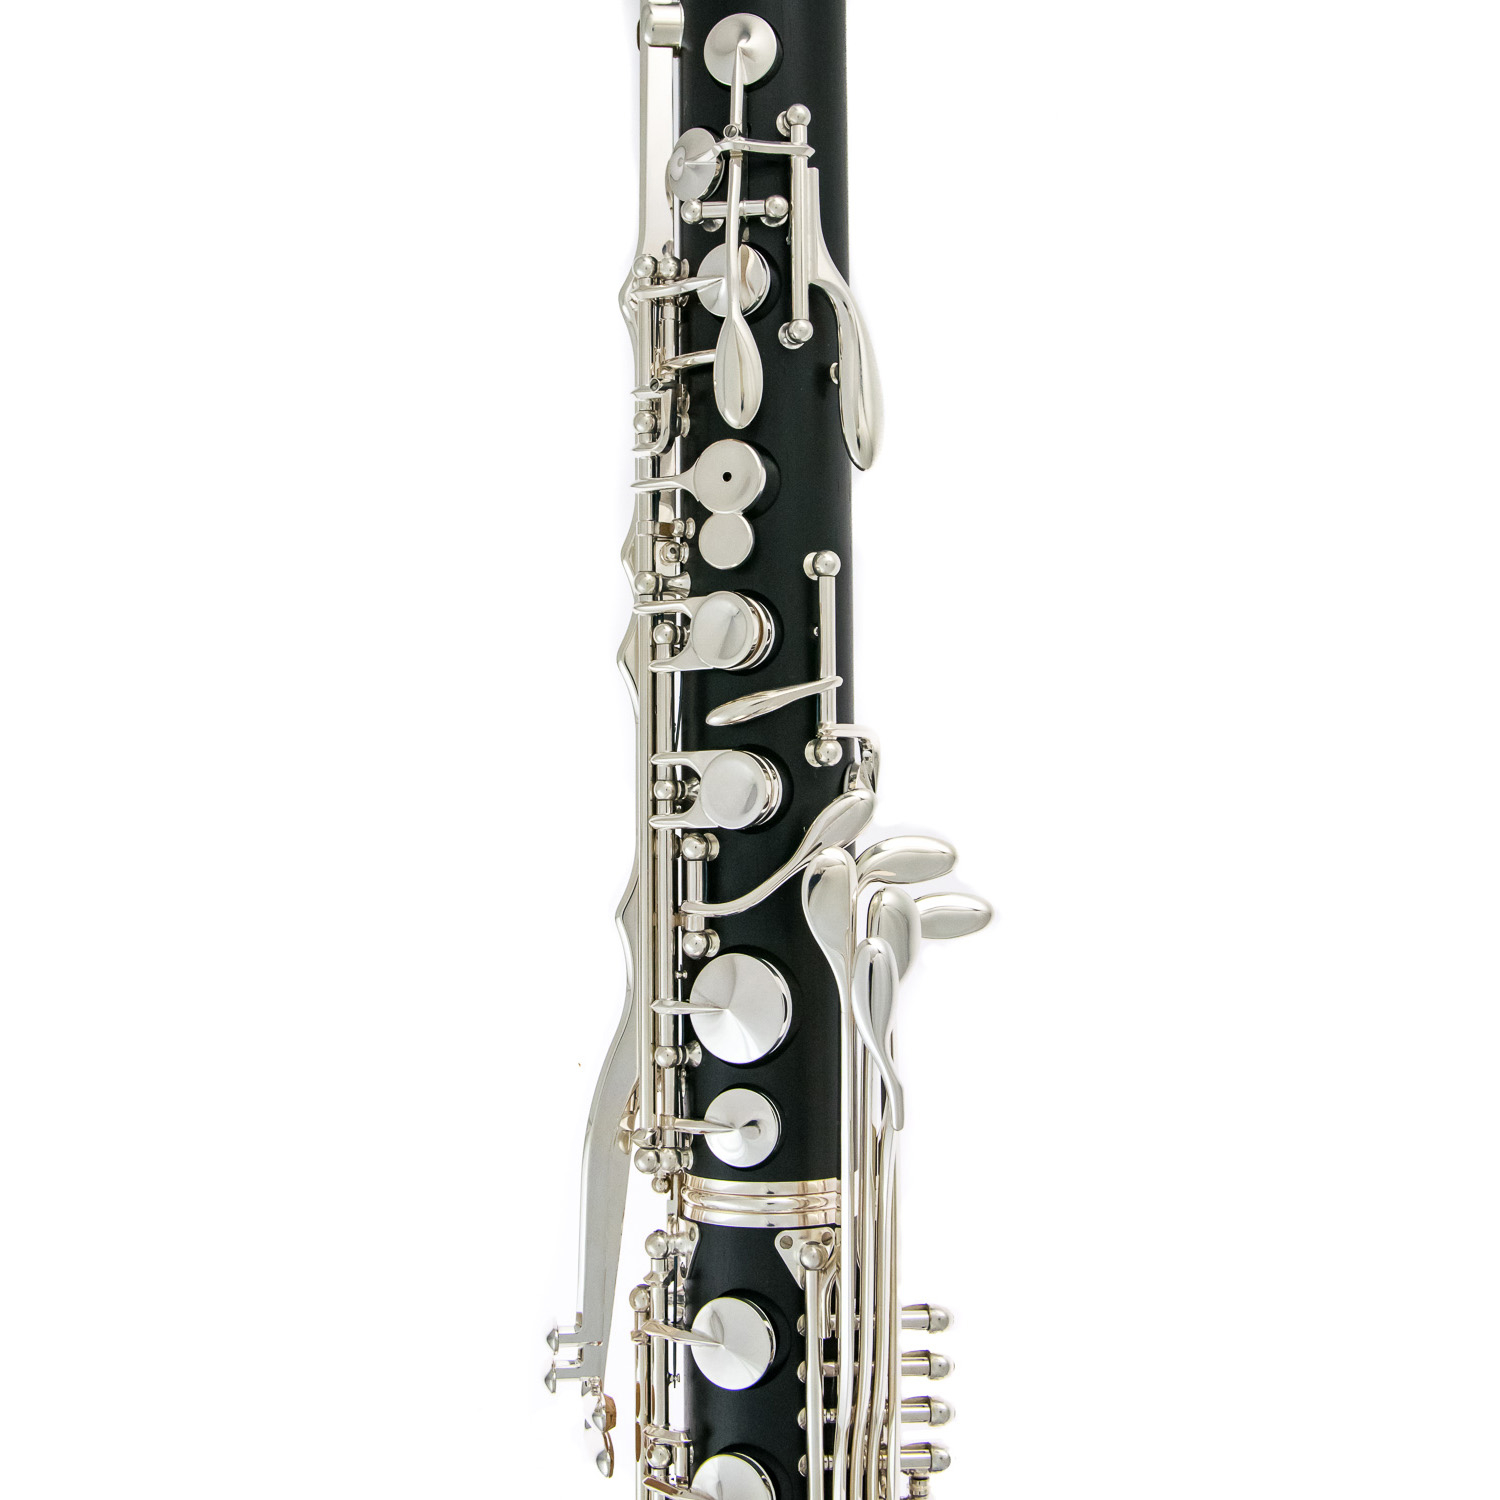 Yamaha Bass Clarinet - YCL 622 II